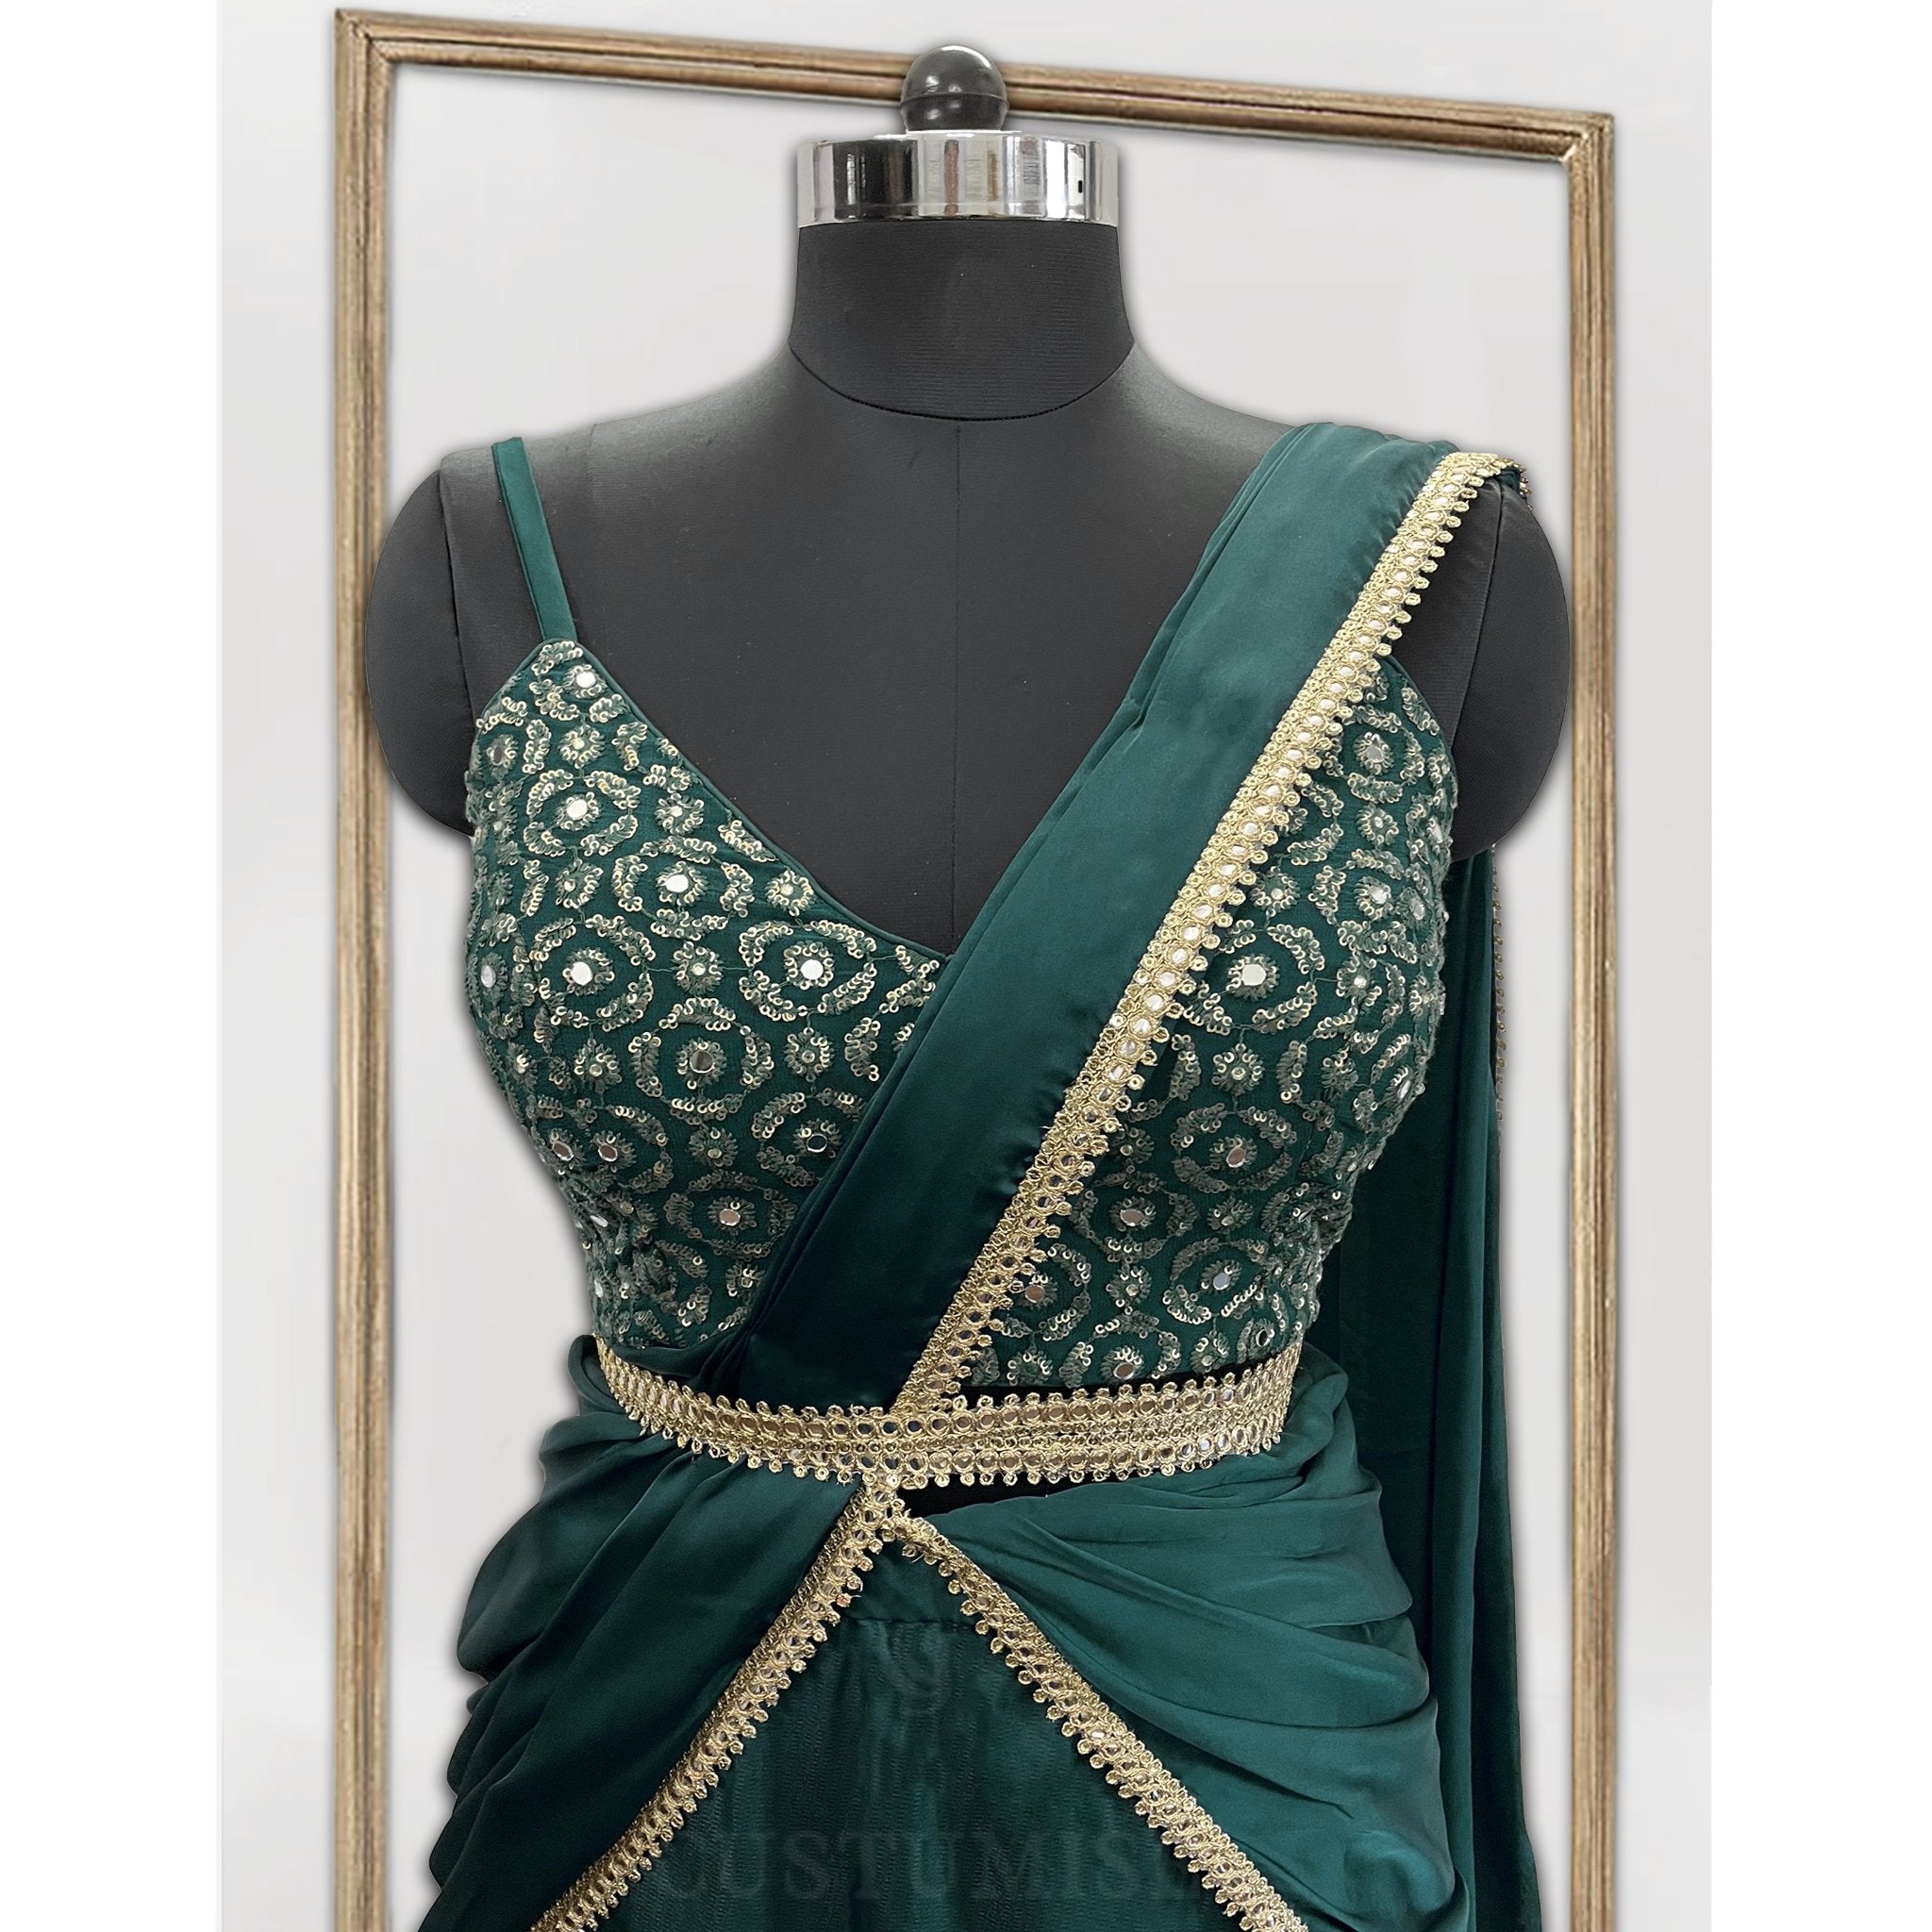 Bottle Green Draped saree - Indian Designer Bridal Wedding Outfit